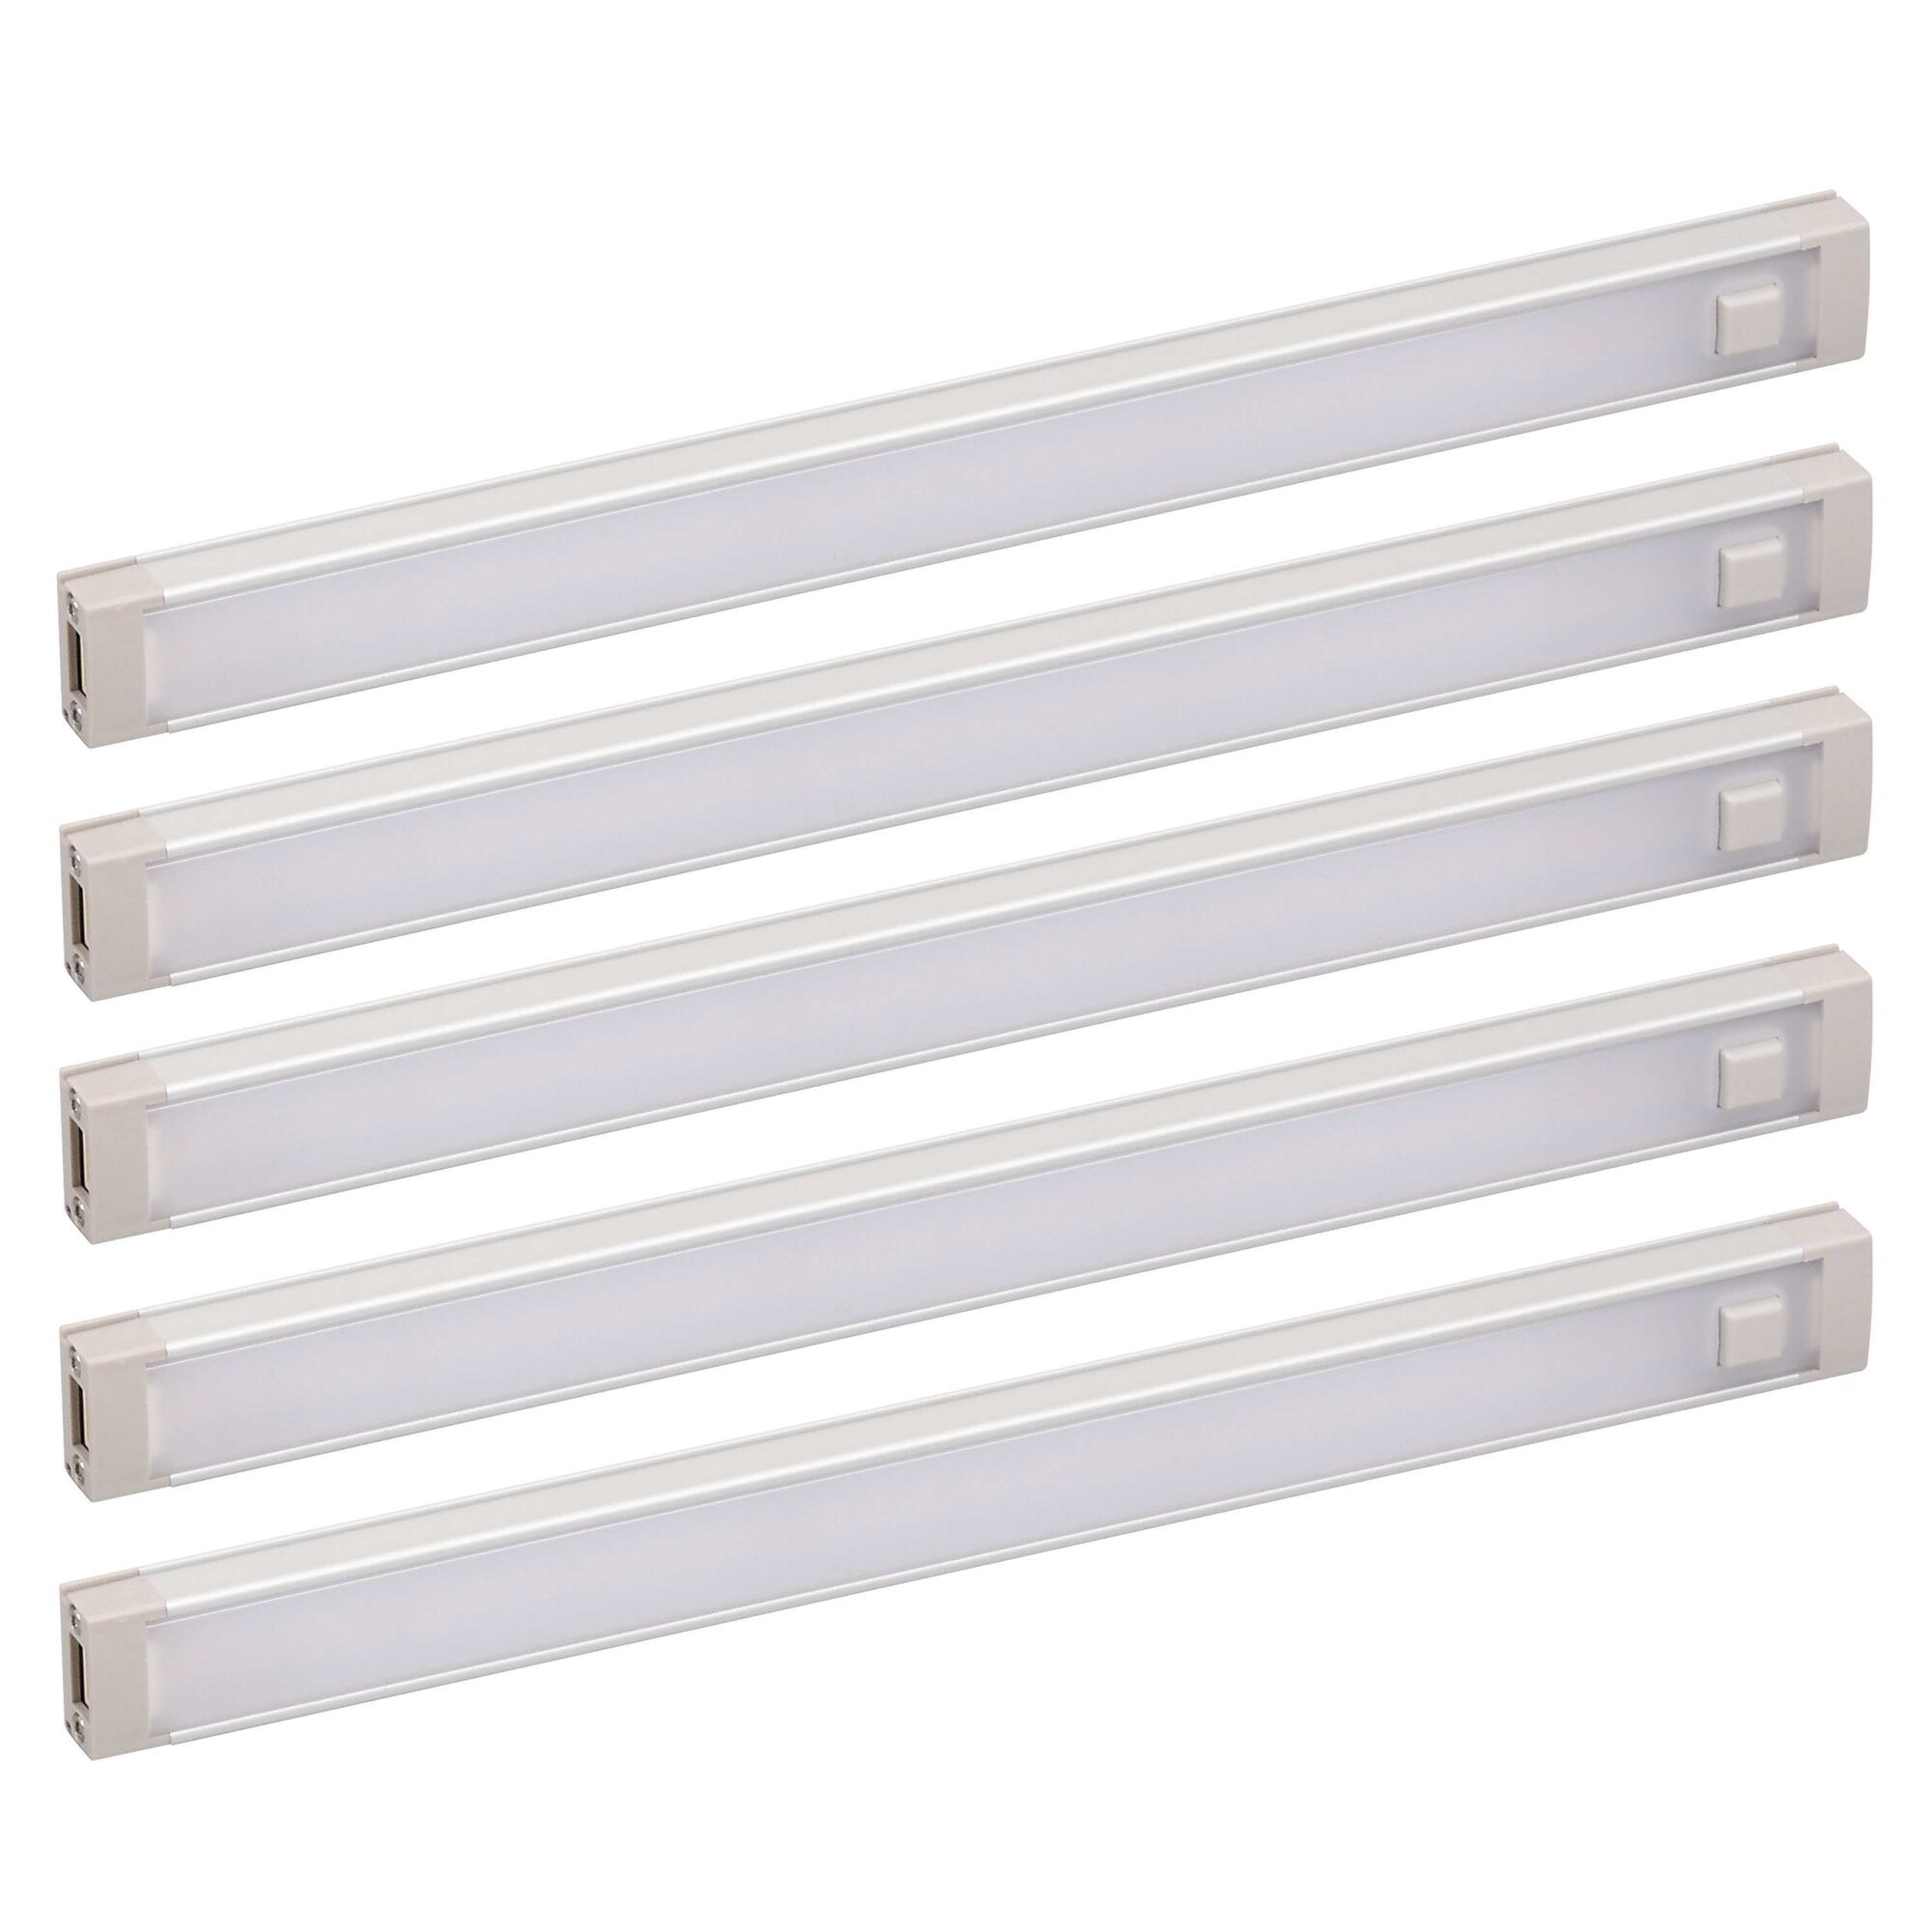 Profile of 9 inch bars in 5 bar L E D under cabinet lighting kit